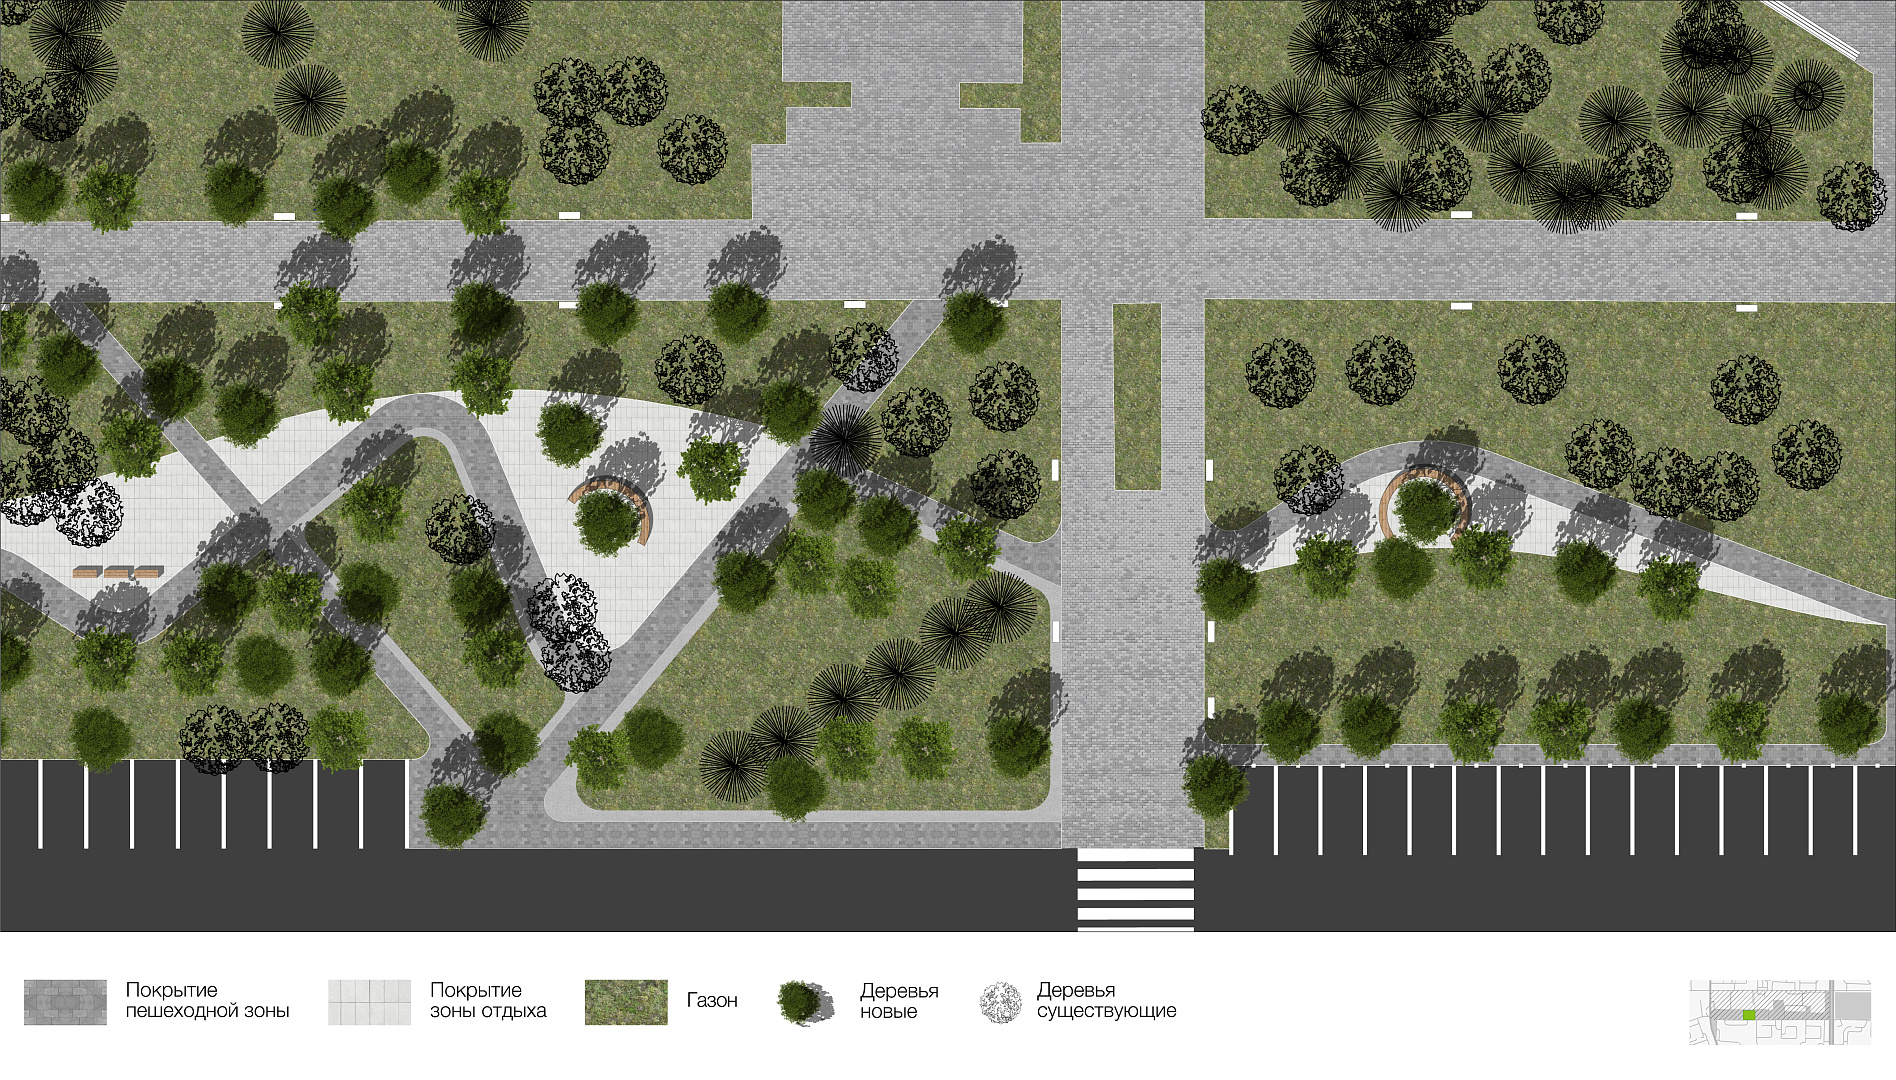 Komarov Boulevard Concept by PROJECT architectural bureau